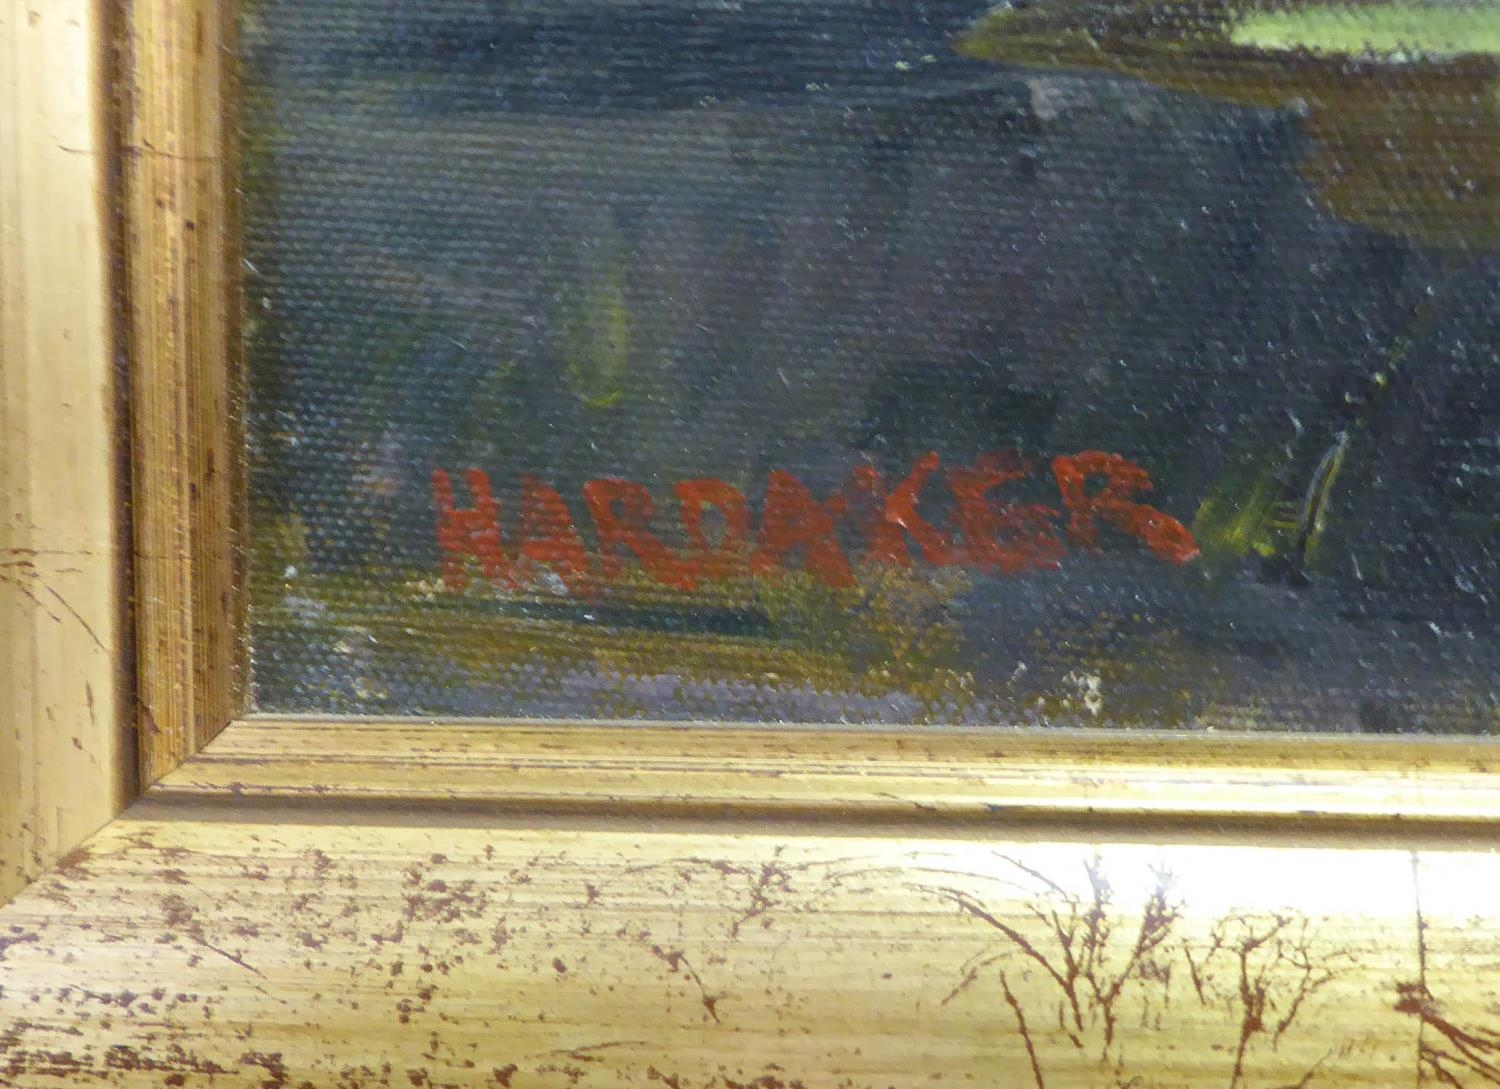 HARDACKER 'Portrait of a poodle', oil on canvas, signed lower left, 50cm x 60cm, framed. - Image 2 of 2